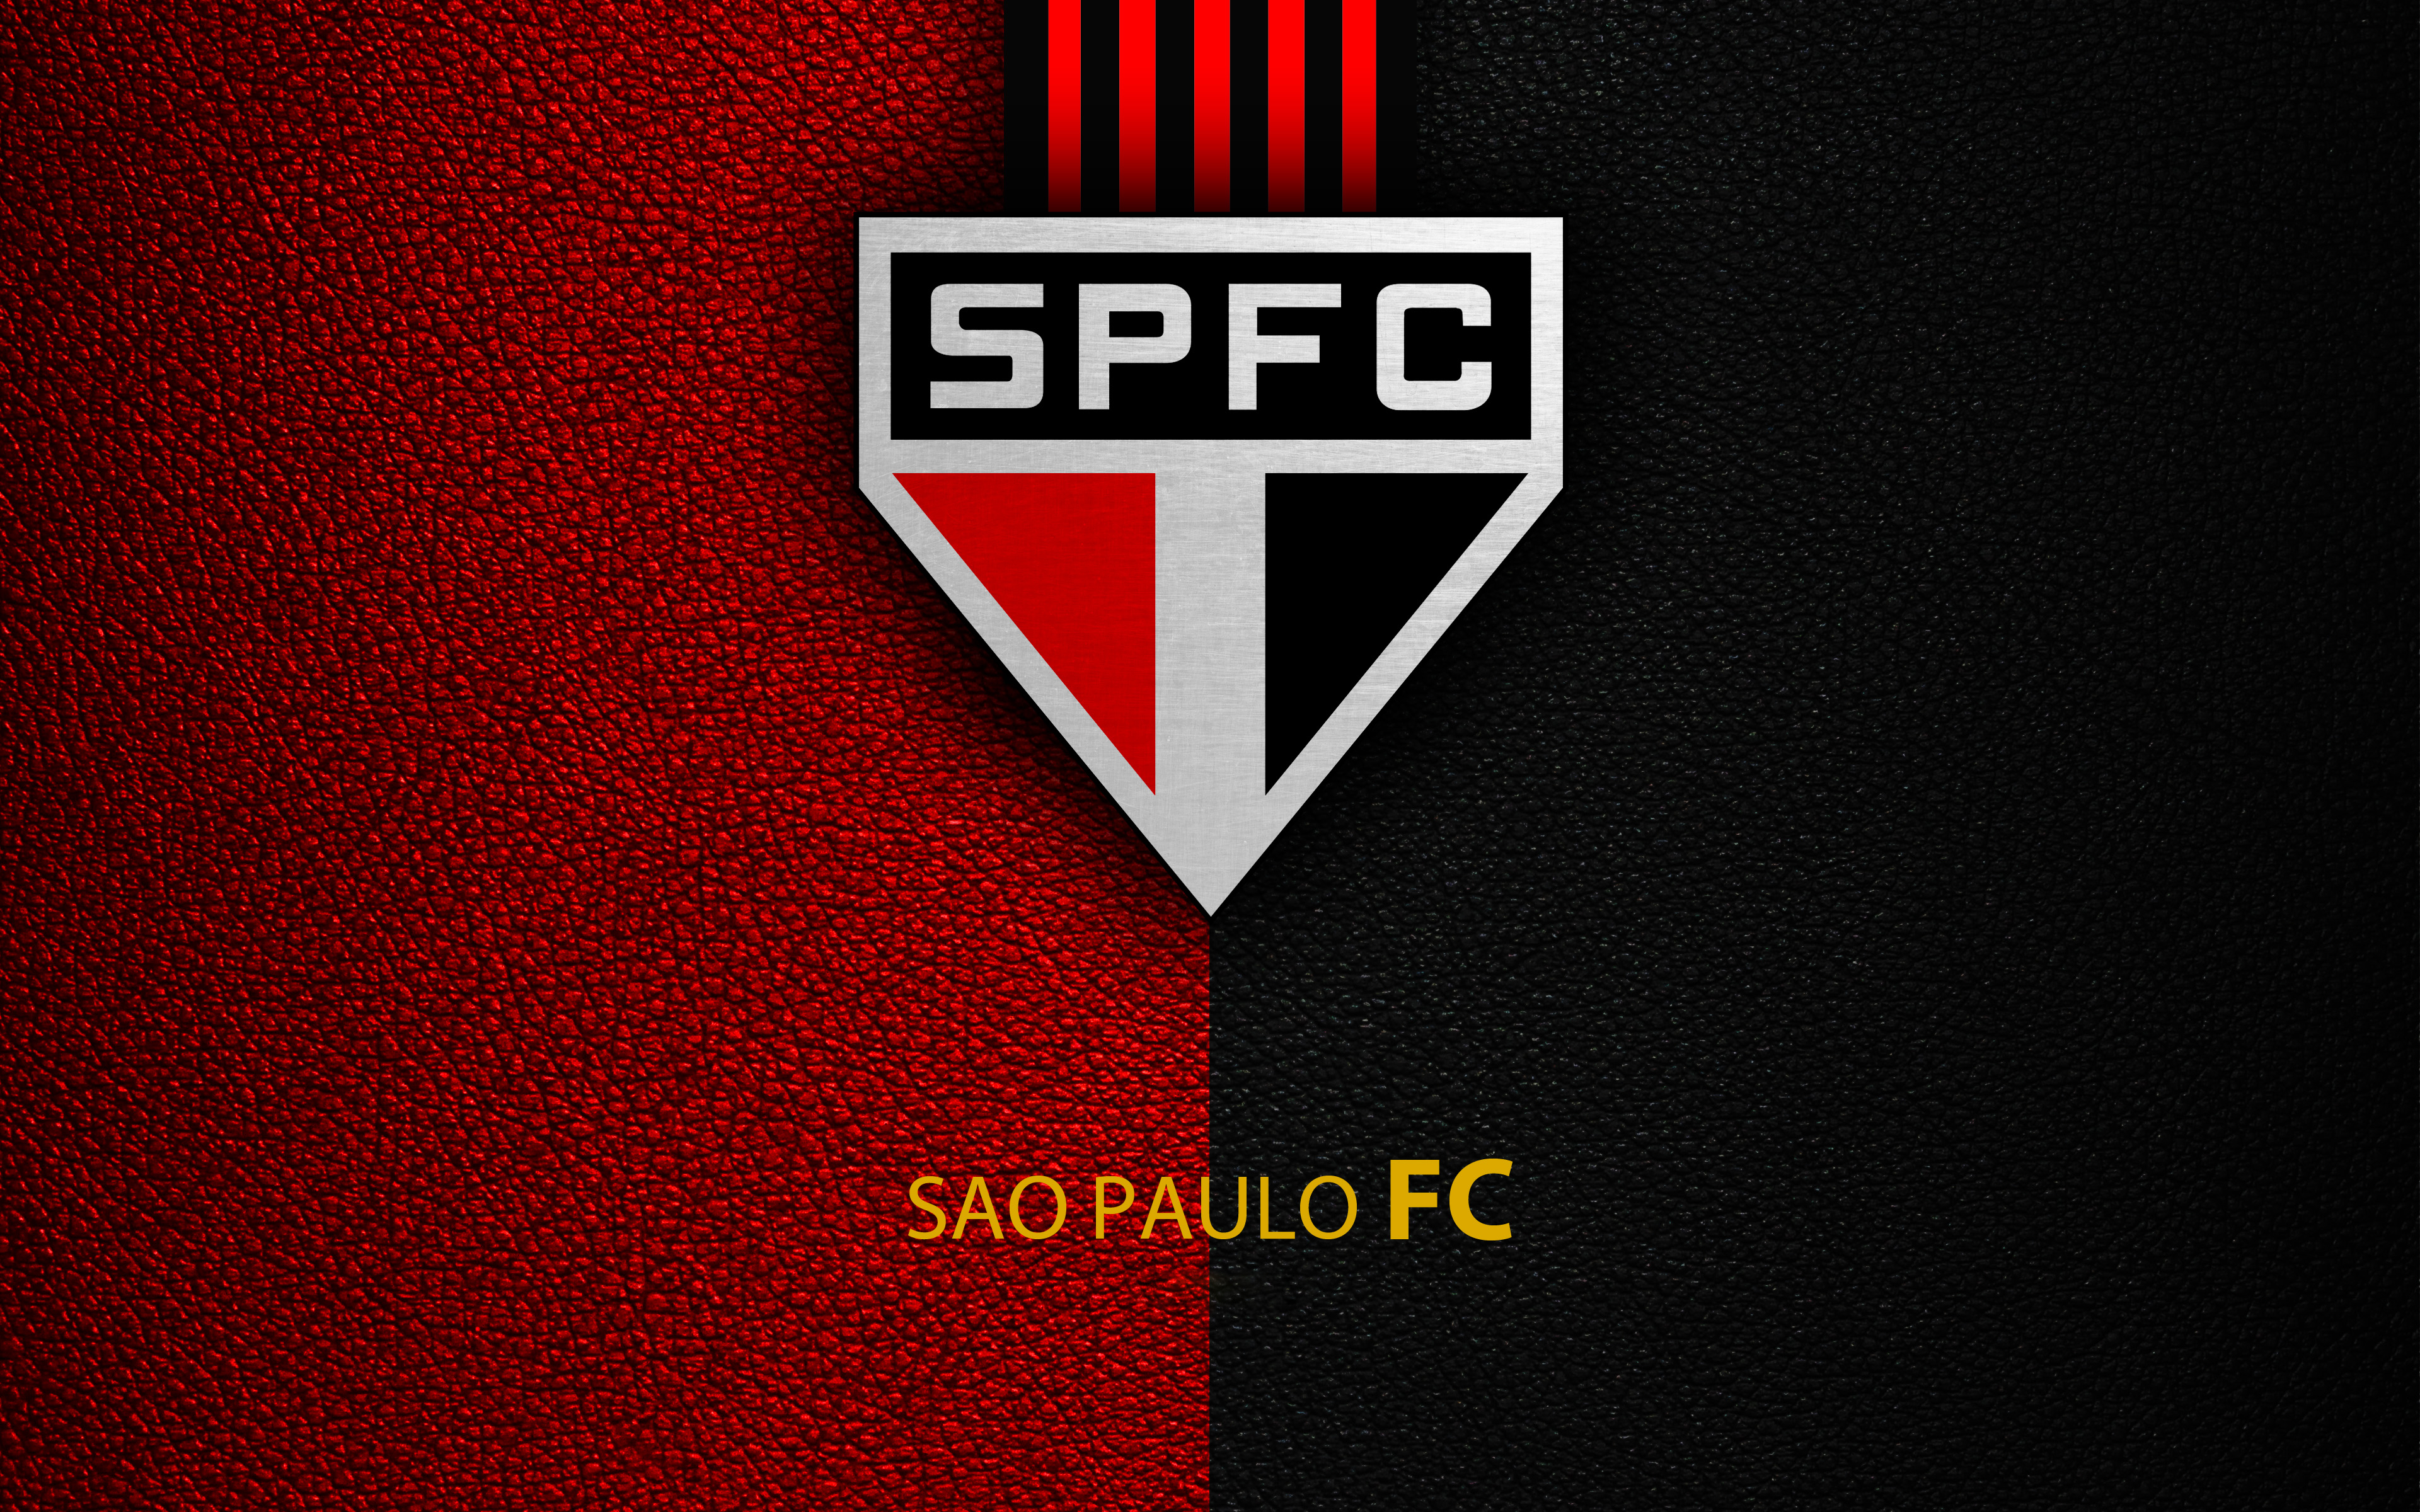 S O Paulo Fc 4k Ultra HD Wallpaper Background Image